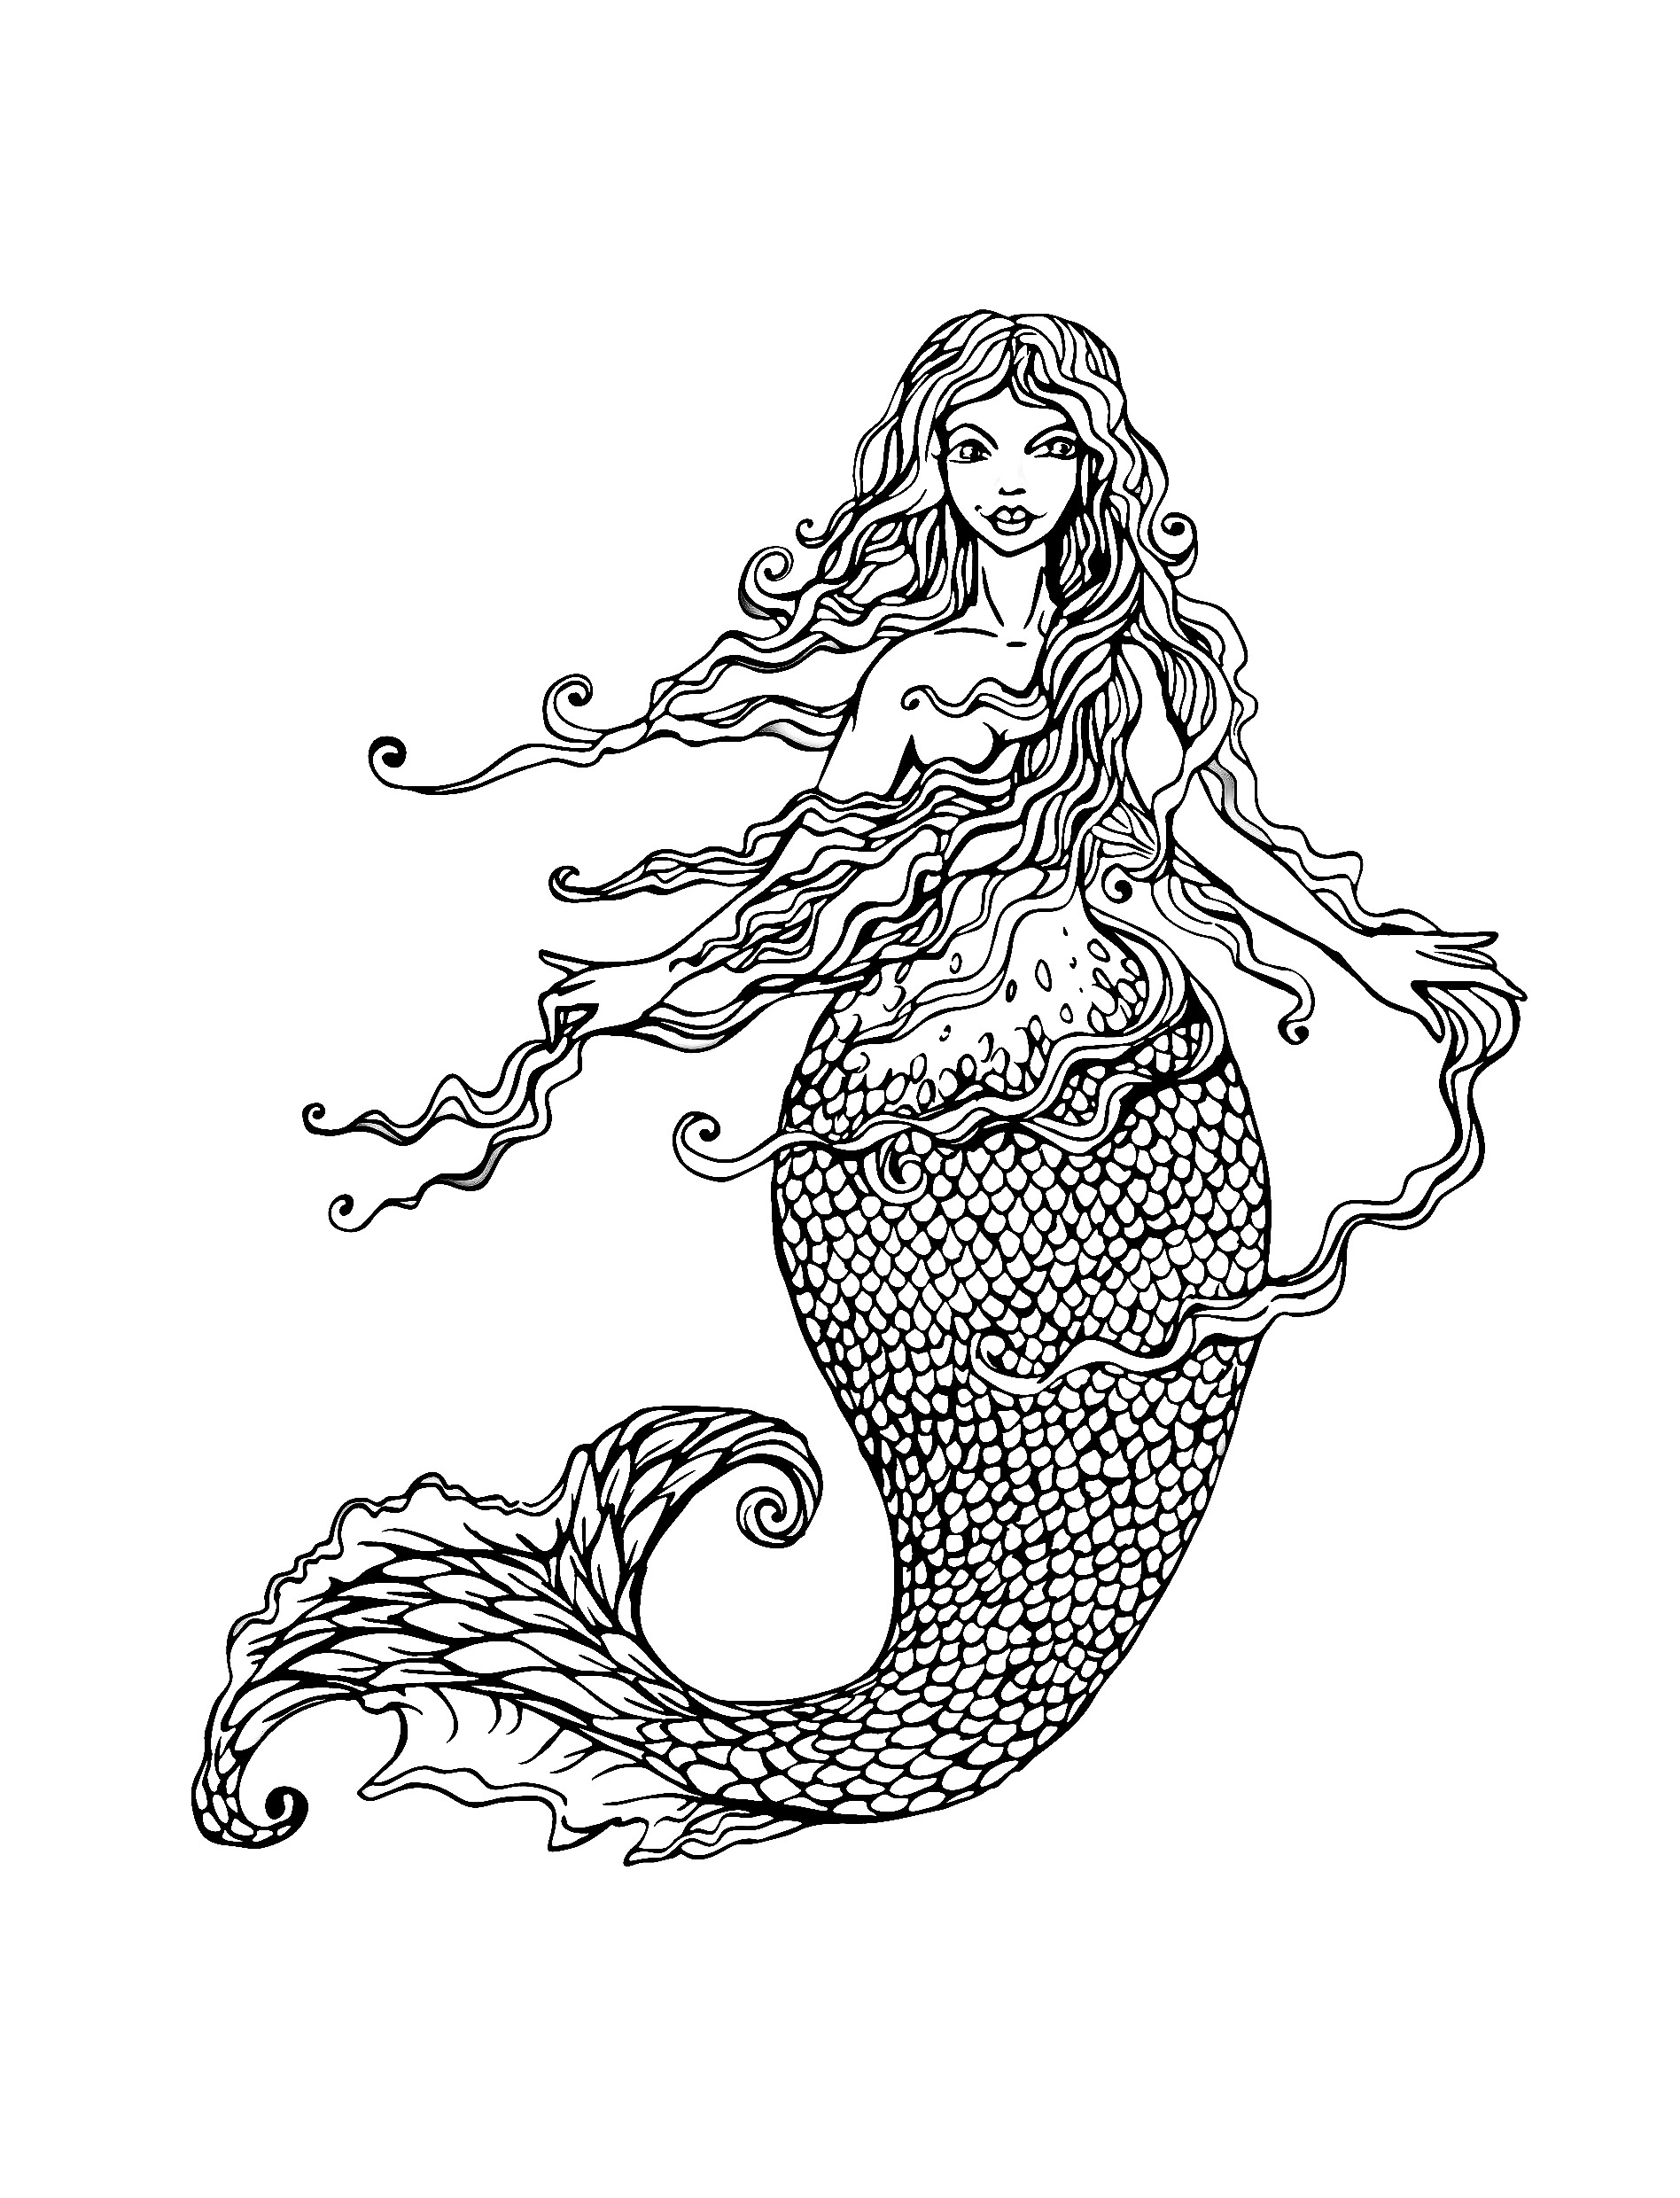 Printable Coloring Pages Mermaid - Printable World Holiday